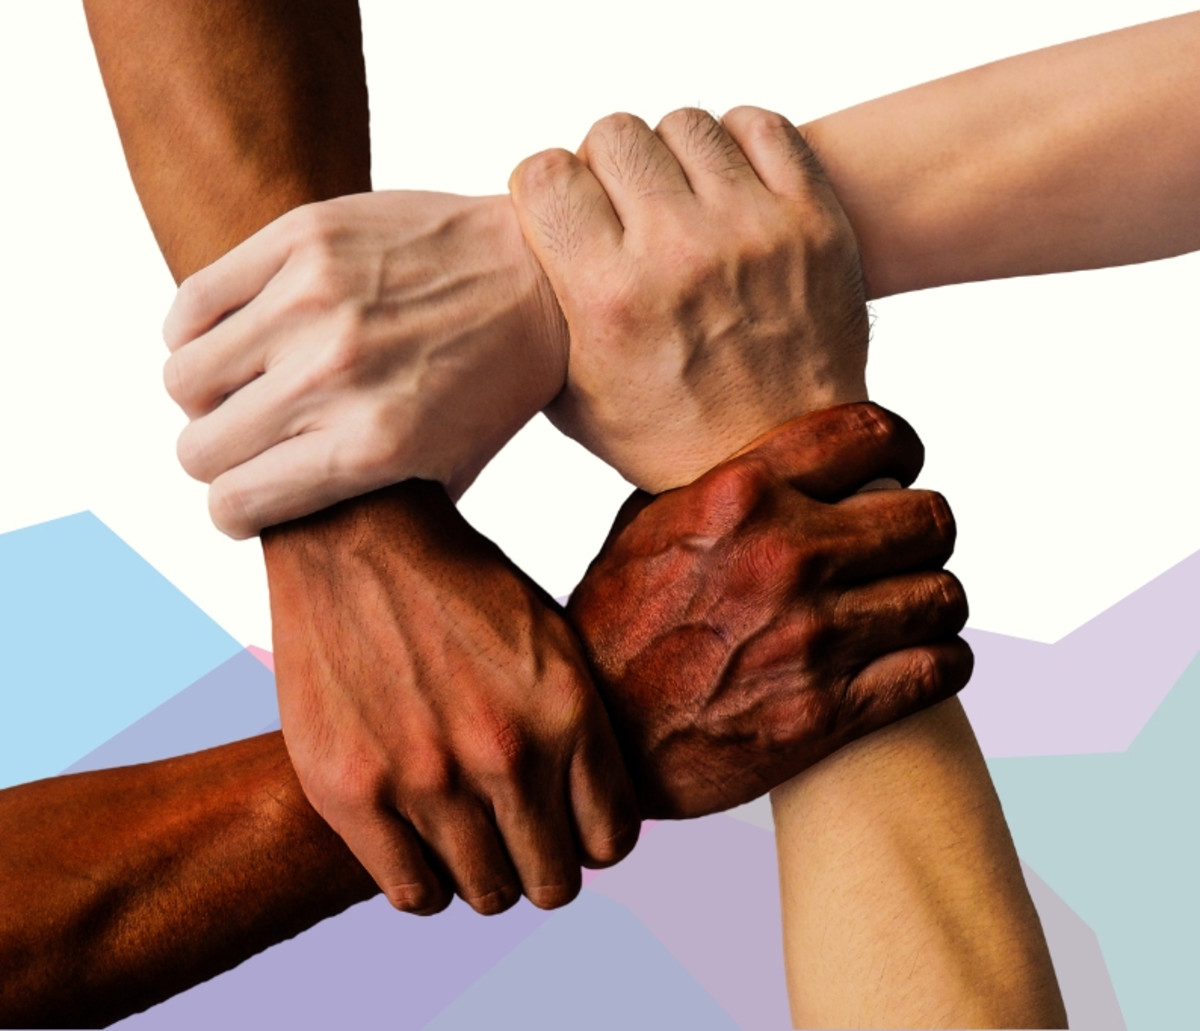 Essay on Unity in Diversity